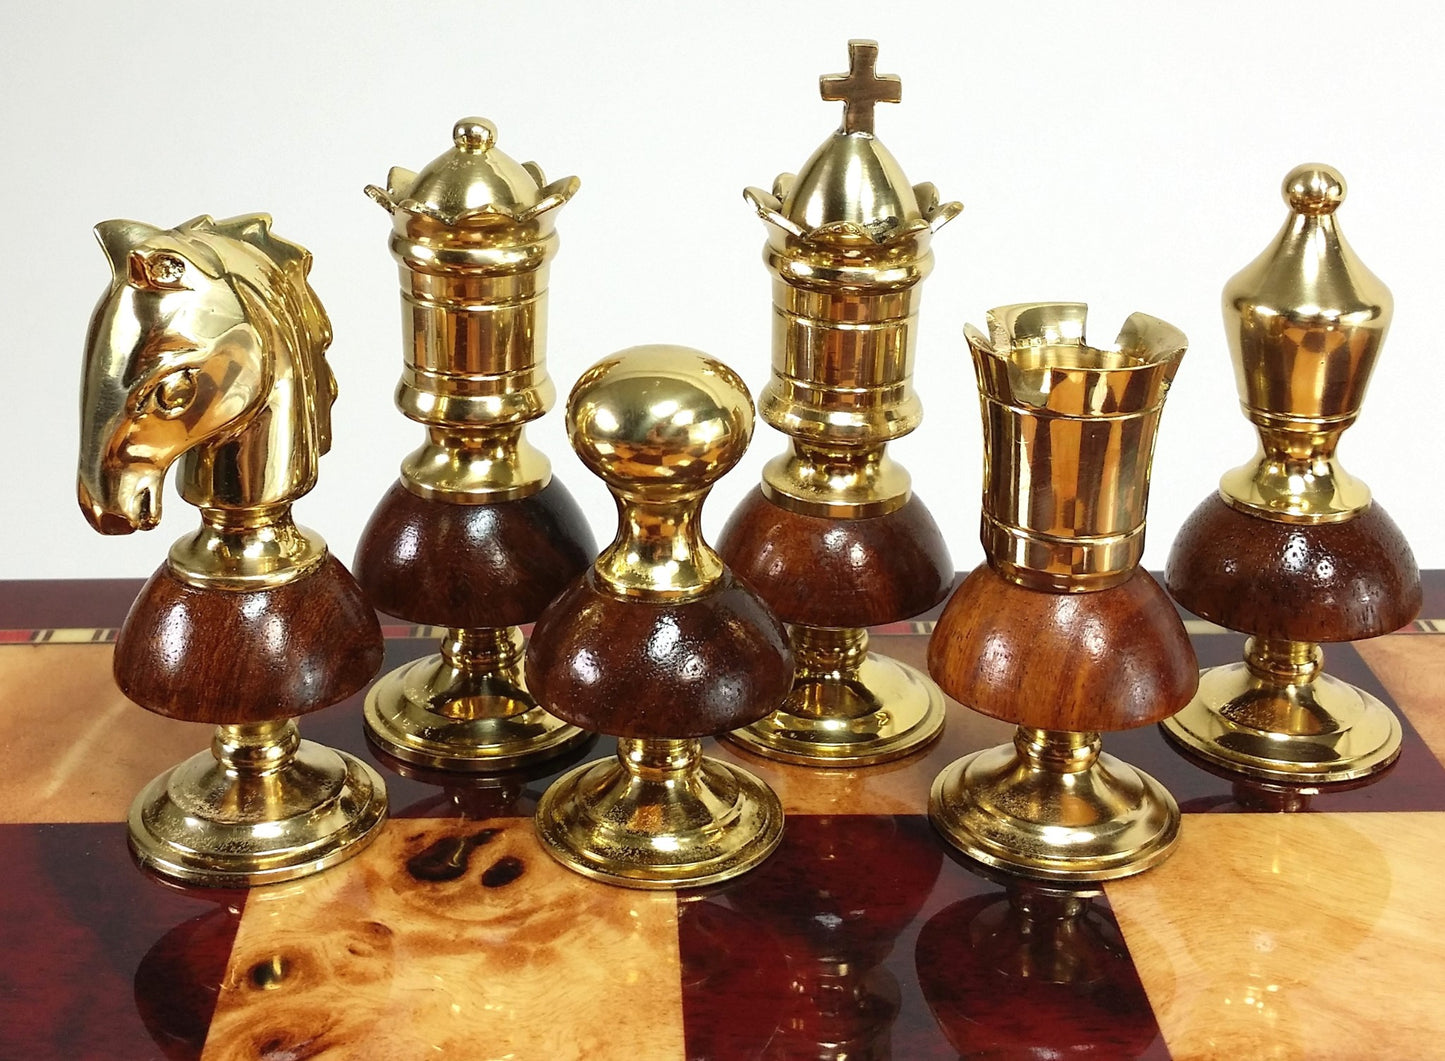 BRASS METAL Gold Black Chrome Royal Staunton Chess Set W 18" Cherry Color Board